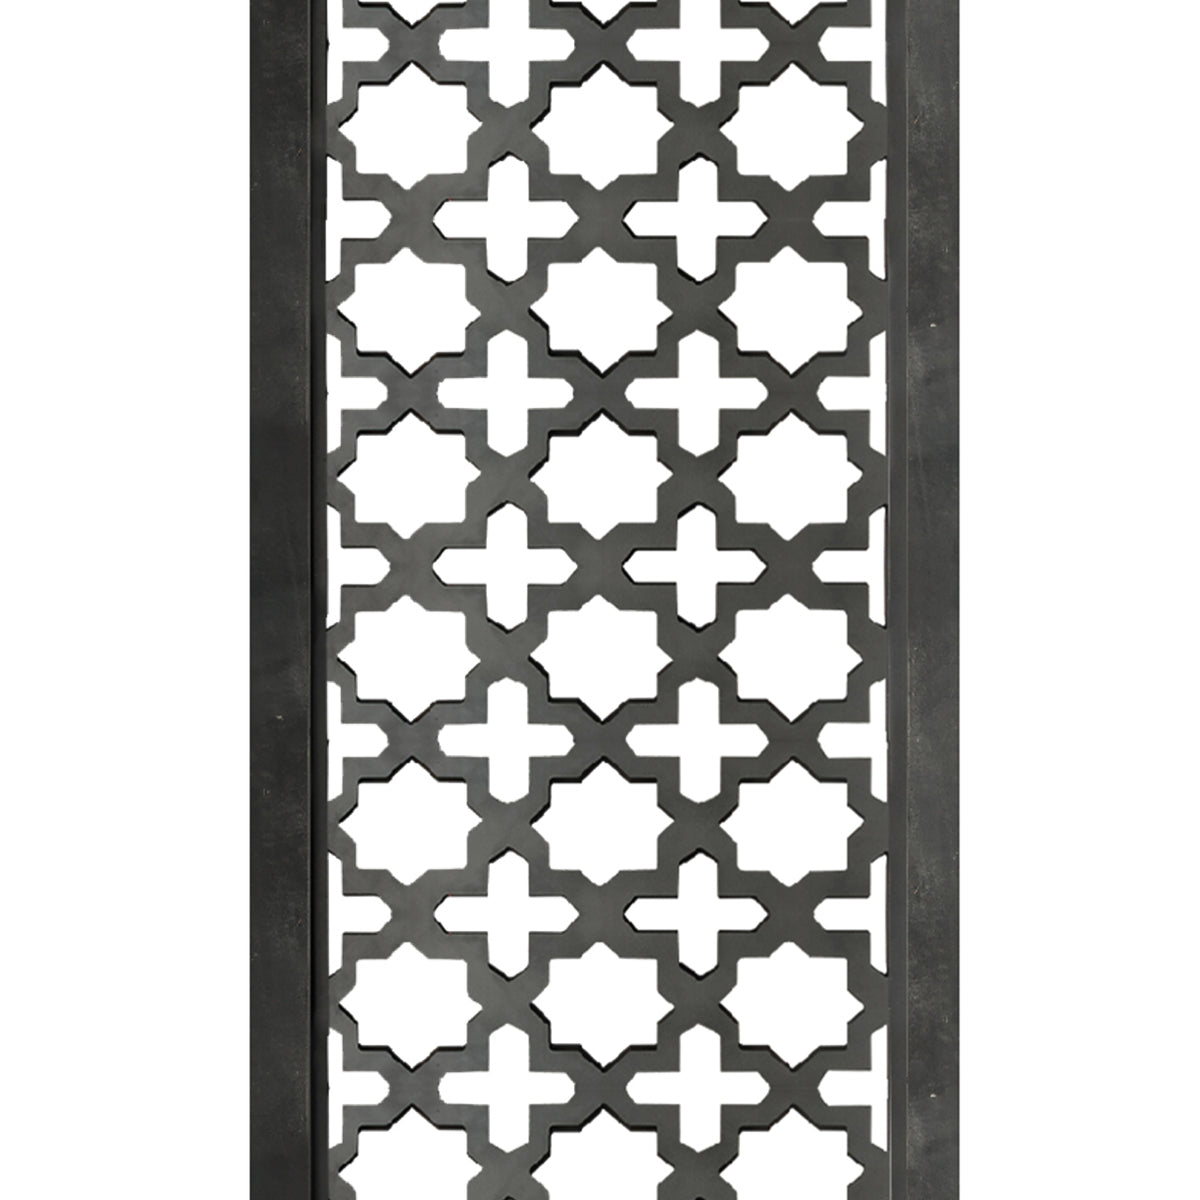 Rectangular Mango Wood Wall Panel with Cutout Lattice Pattern, Burnt Black - BM01888